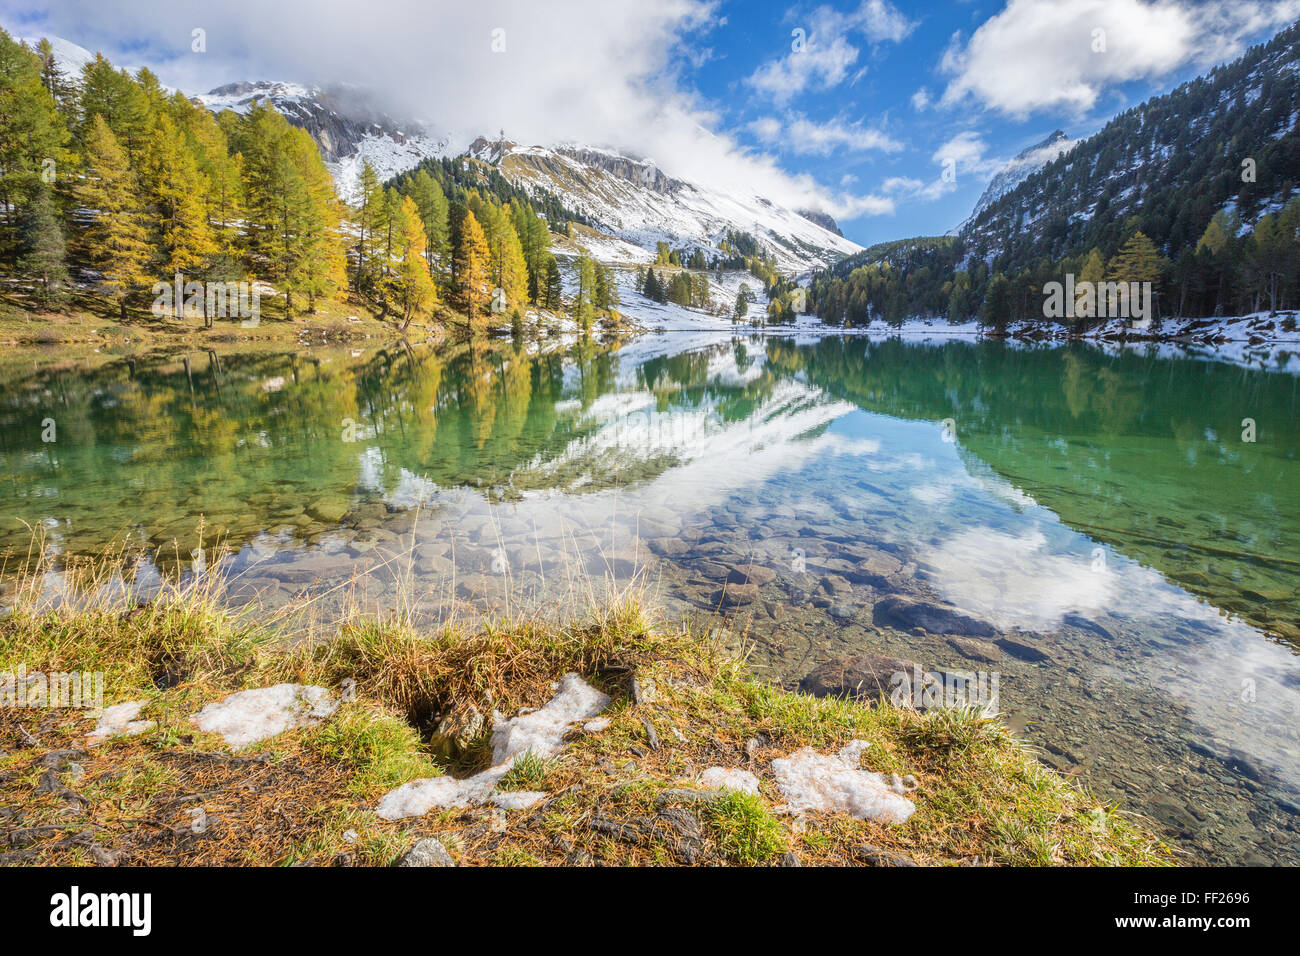 Colorful trees and snowy peaks reflected in Lai da Palpuogna, Albula Pass, Engadine, Canton of Graubunden, Switzerland, Europe Stock Photo